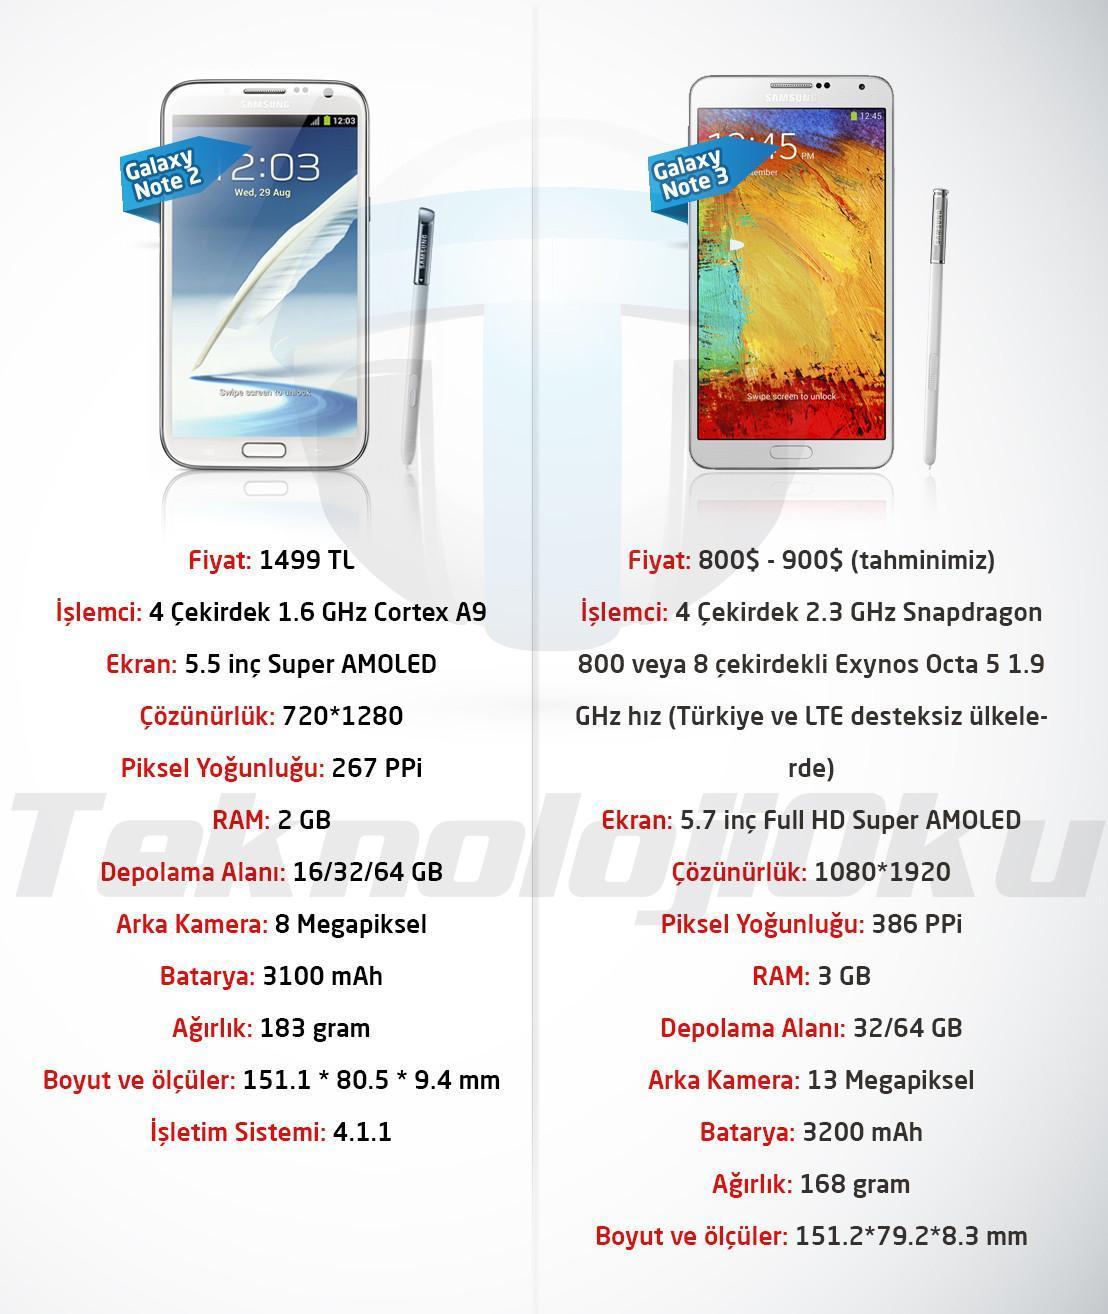 Galaxy Note 3 ile Note 2 karşılaştırma